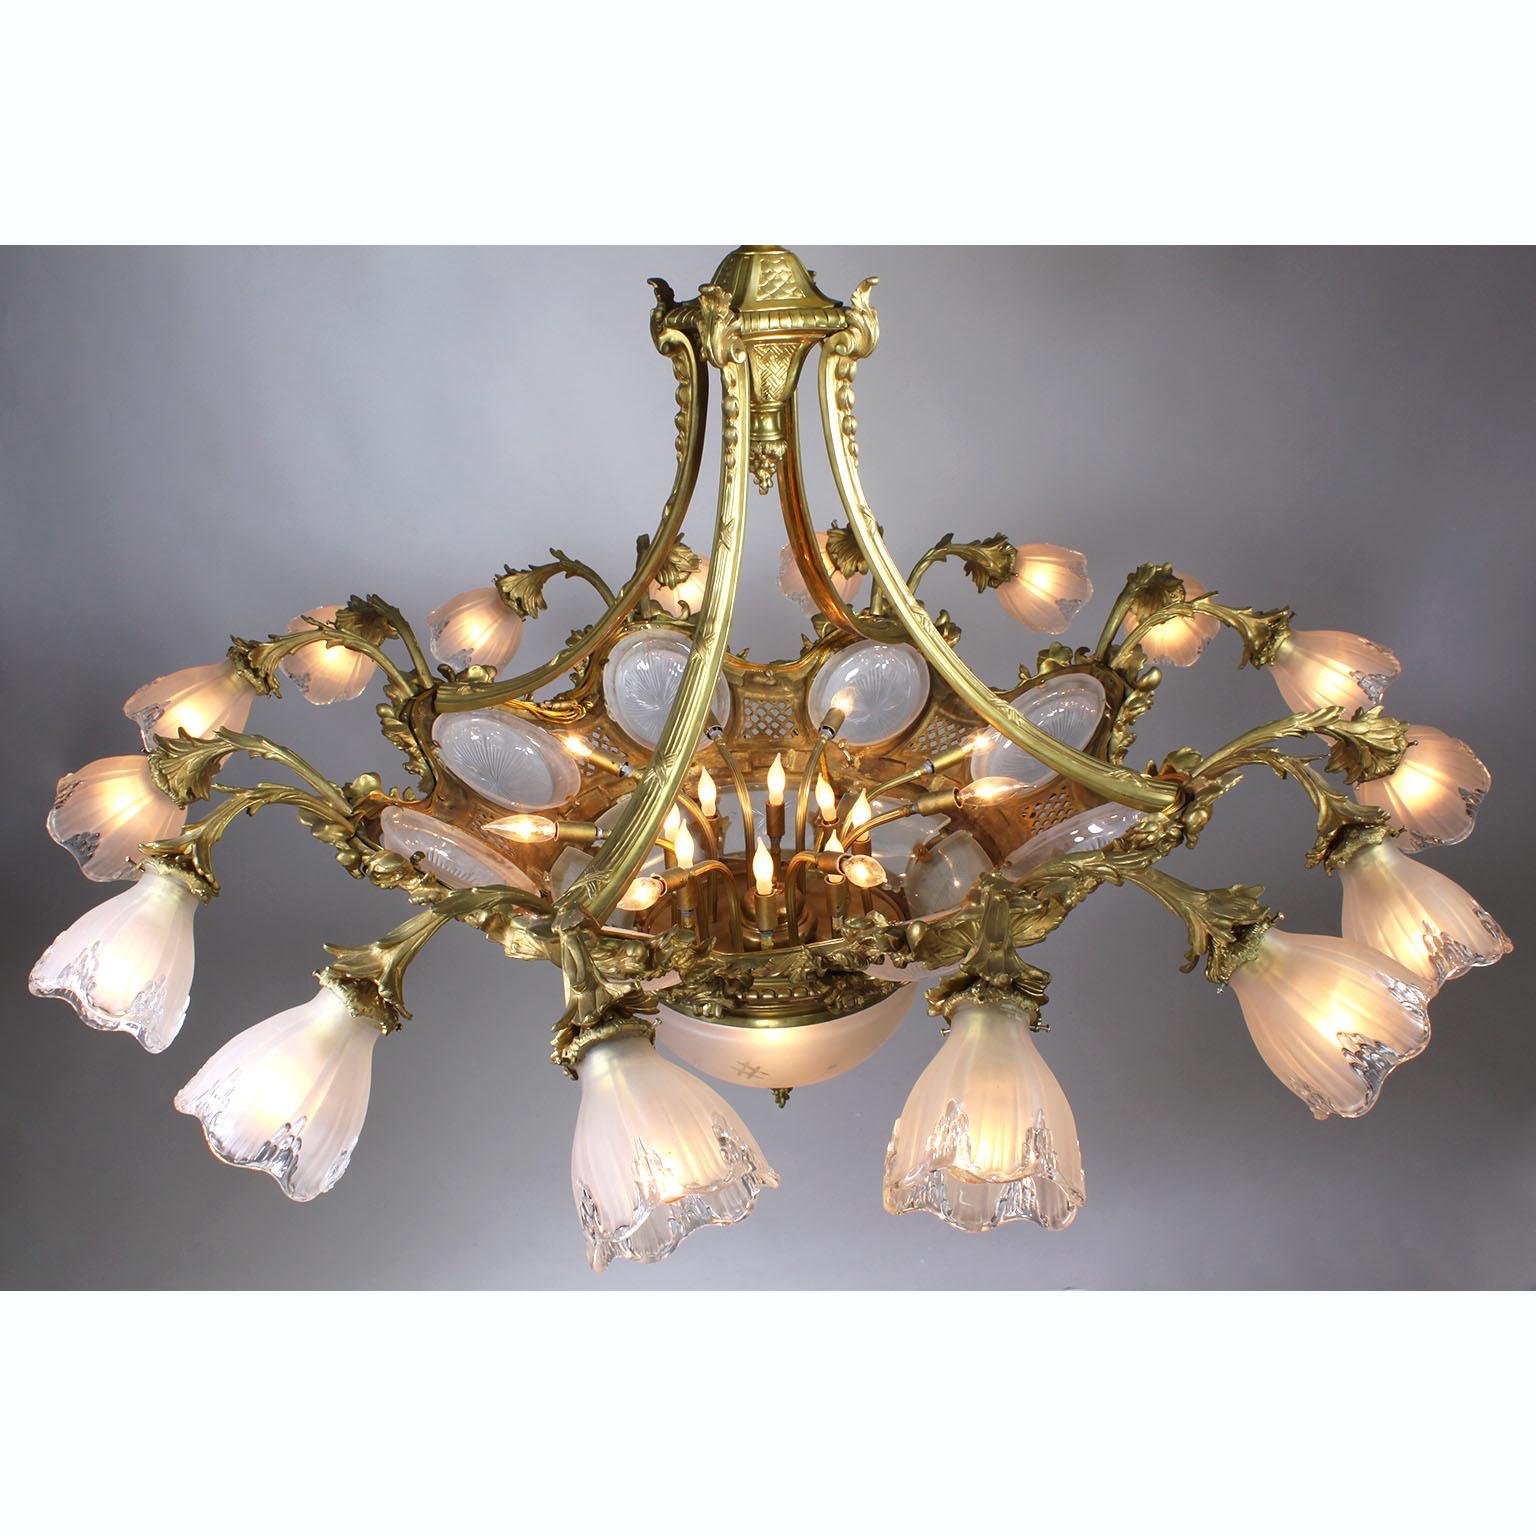 French Belle Époque Gilt-Bronze & Molded Glass 16 Light Plafonnier Chandelier For Sale 5